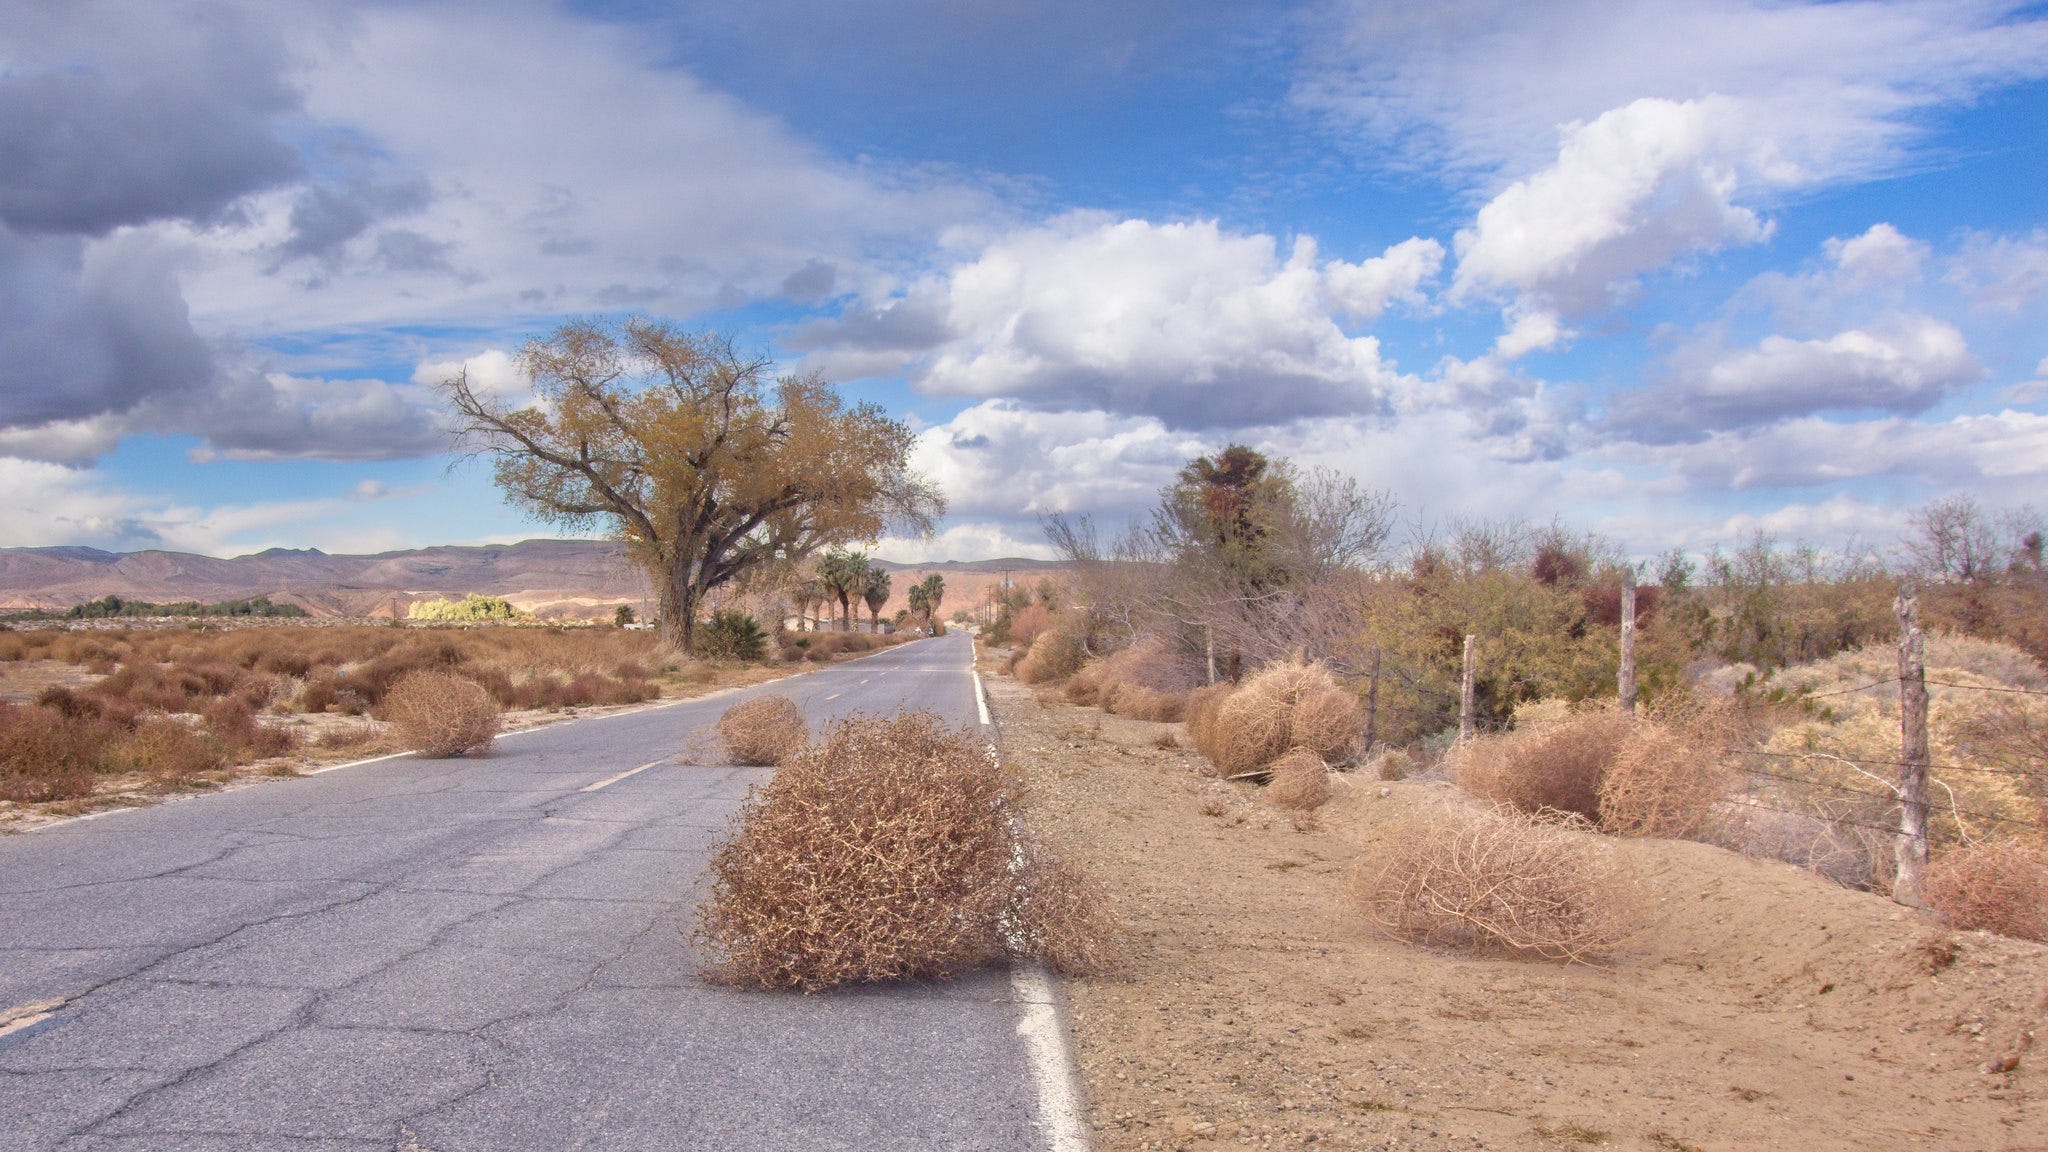 Desert road with tumbleweeds